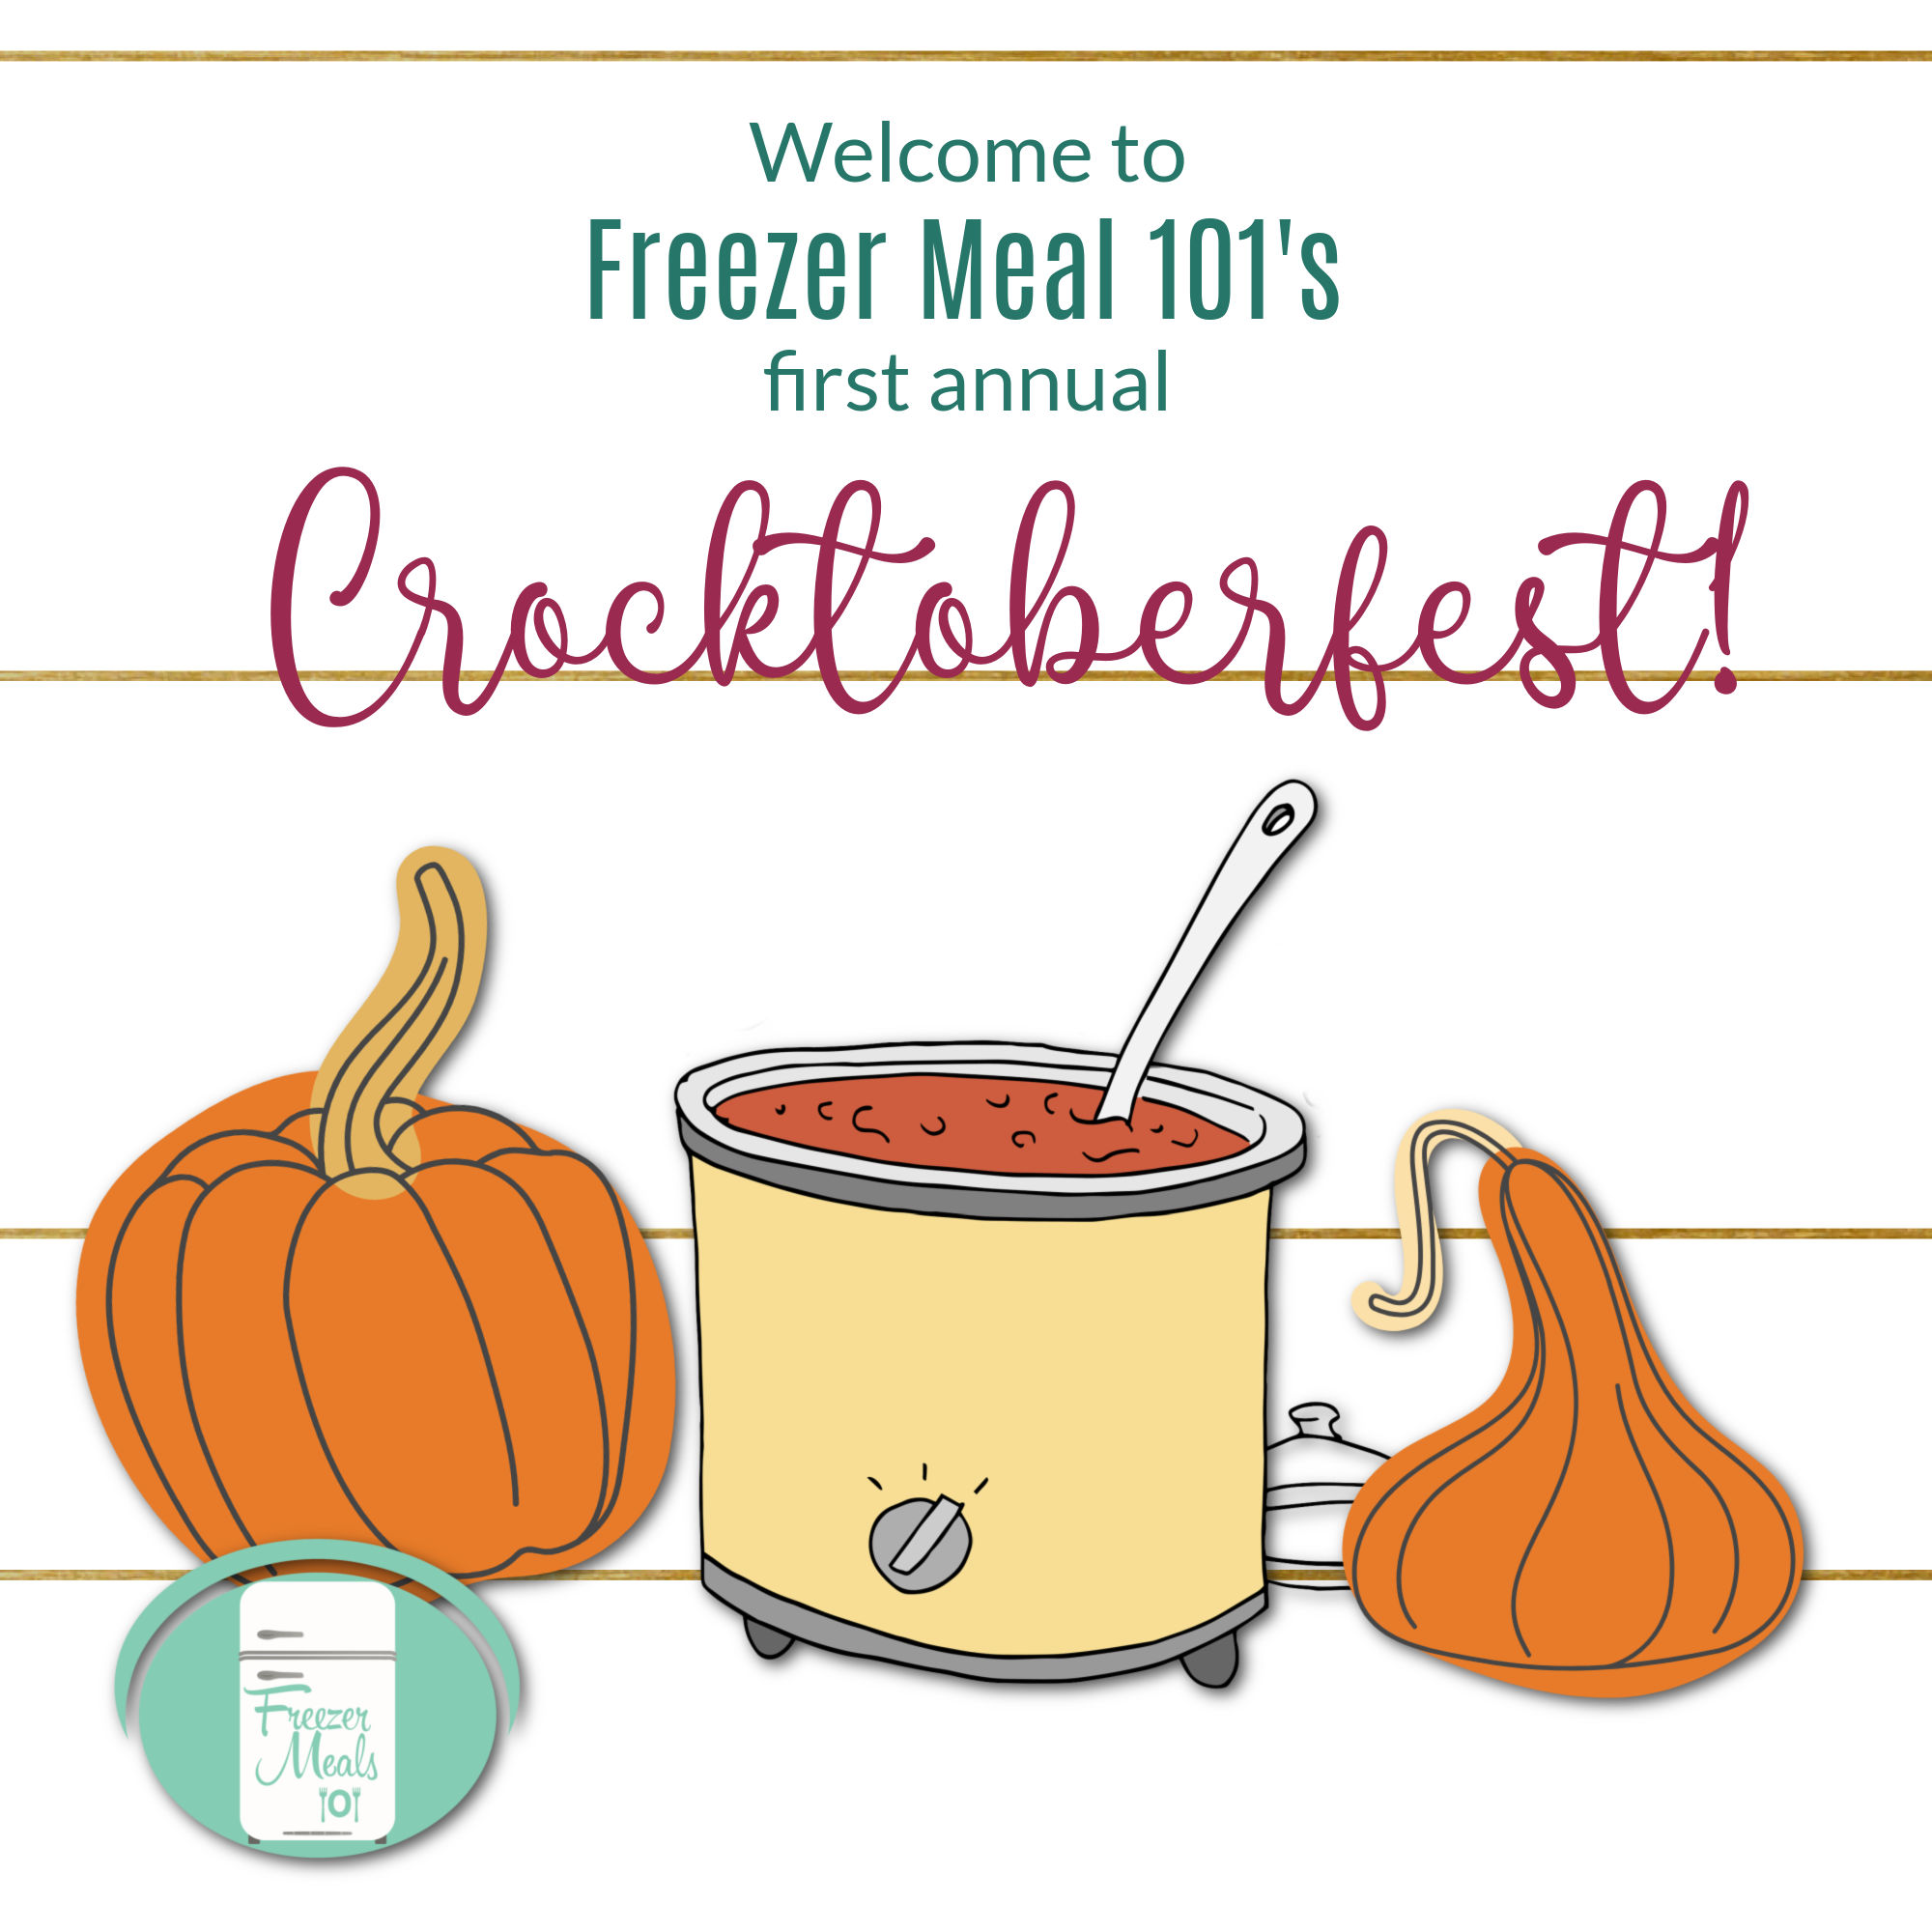 Crocktoberfest Freezer to Slow Cooker Celebration